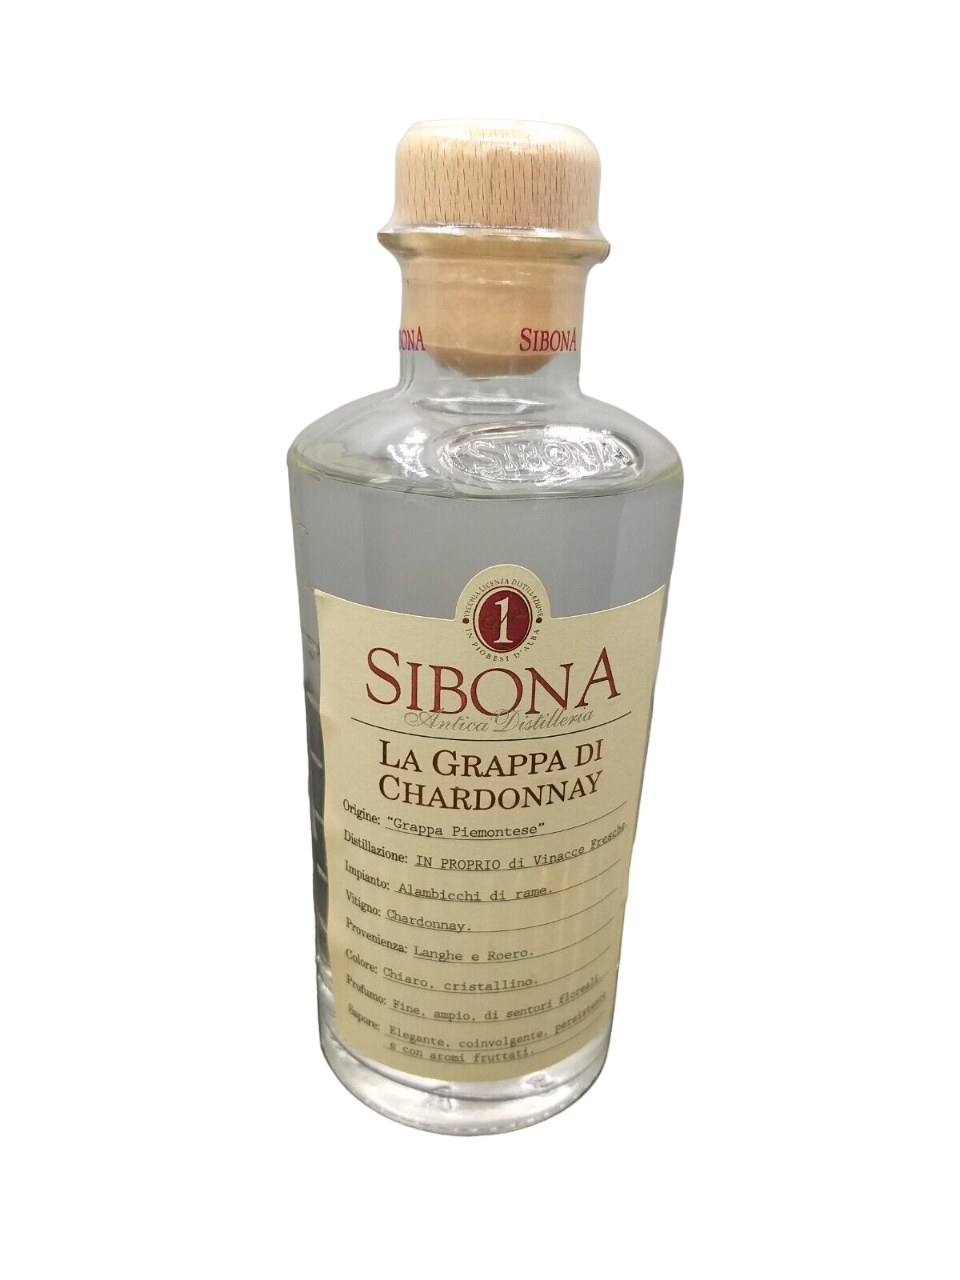 Sibona Grappa La Grappa di Chardonnay Italien 40% VOL. (1x0,5ltr.)